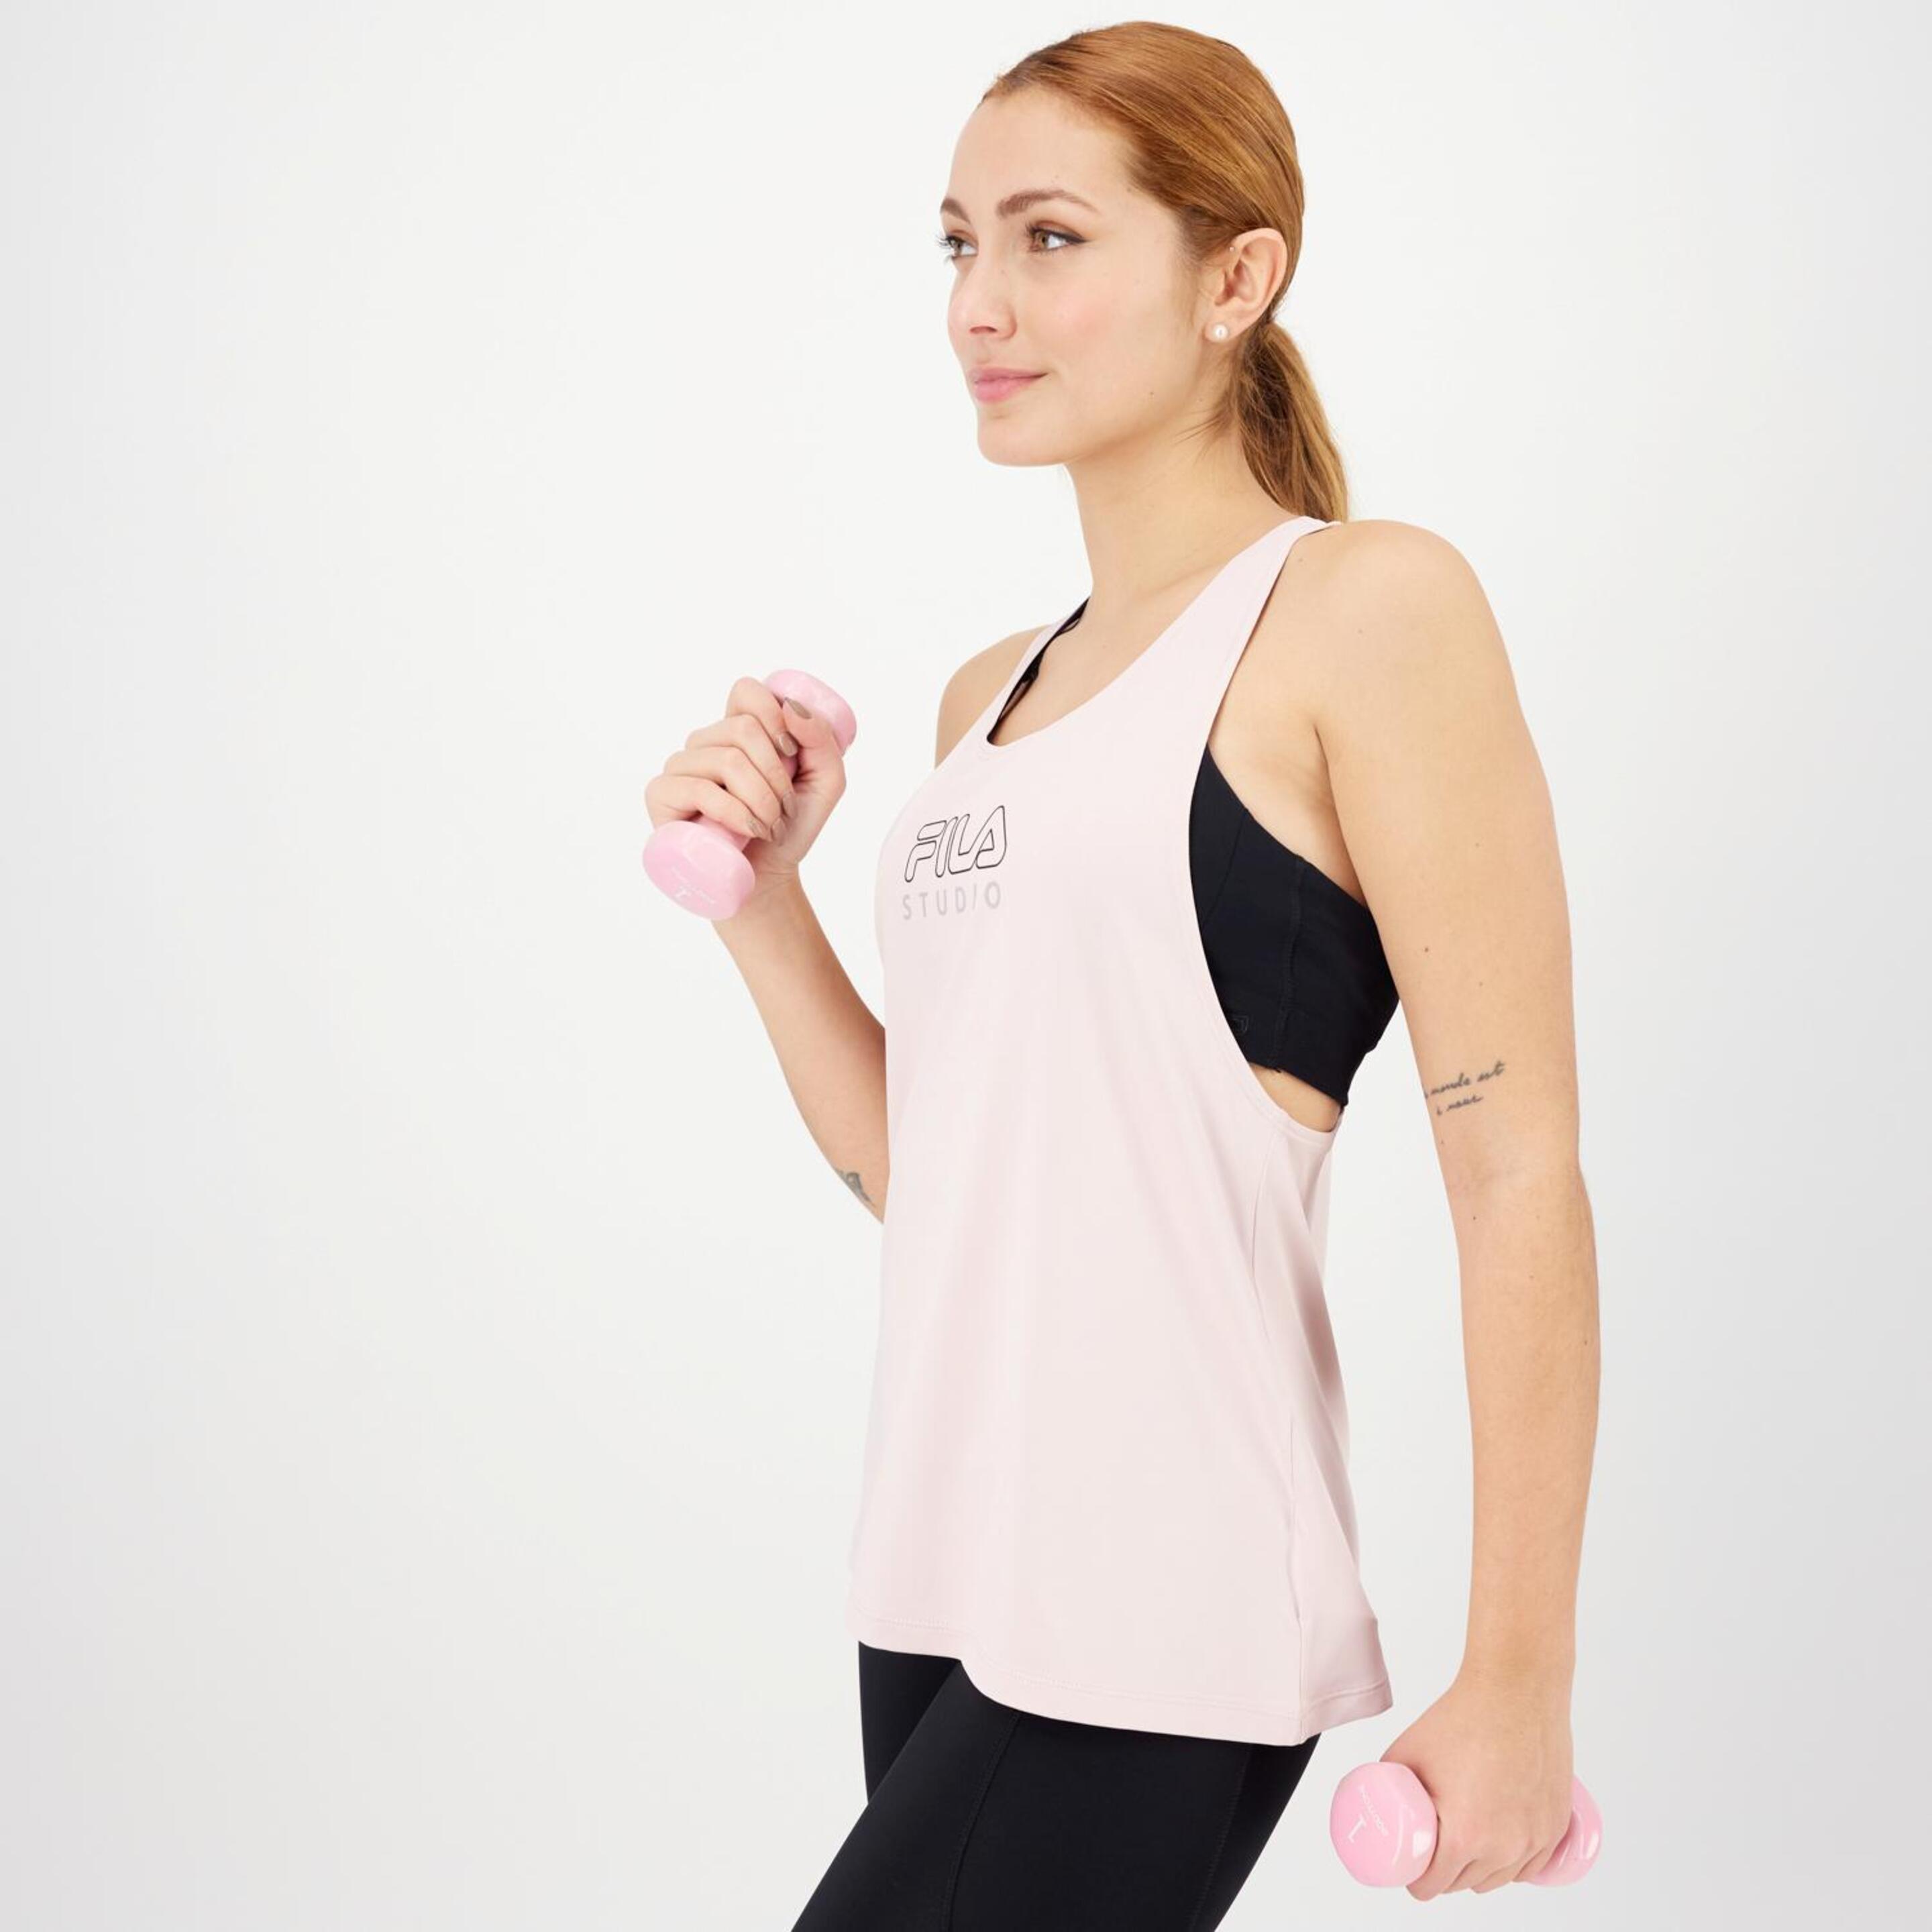 Camiseta Fila - Rosa - Camiseta Fitness Mujer